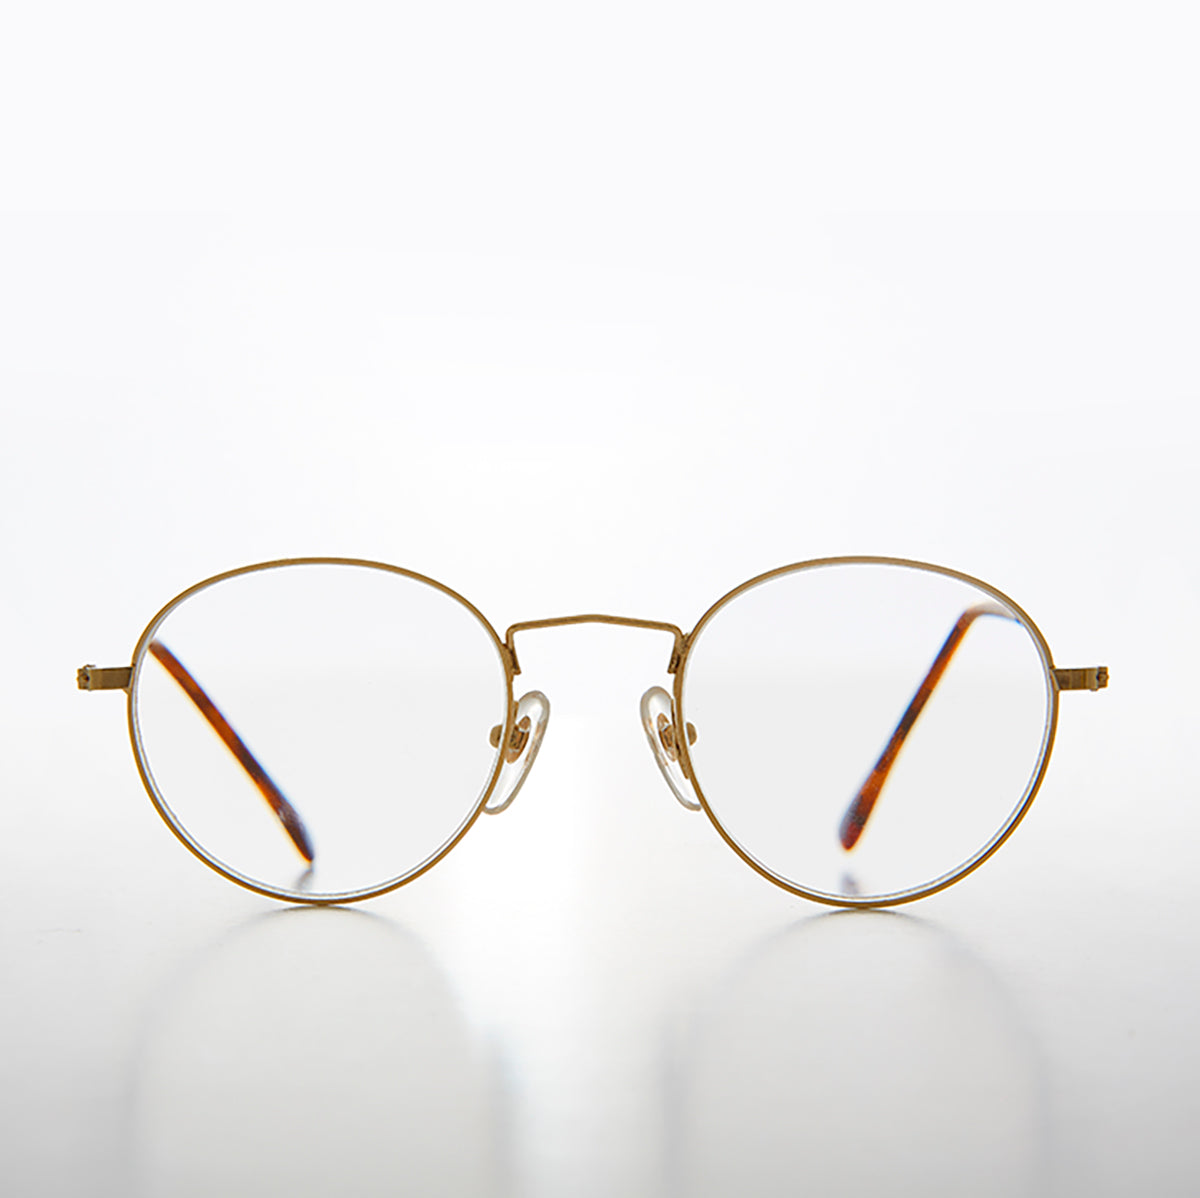 gold polo glasses